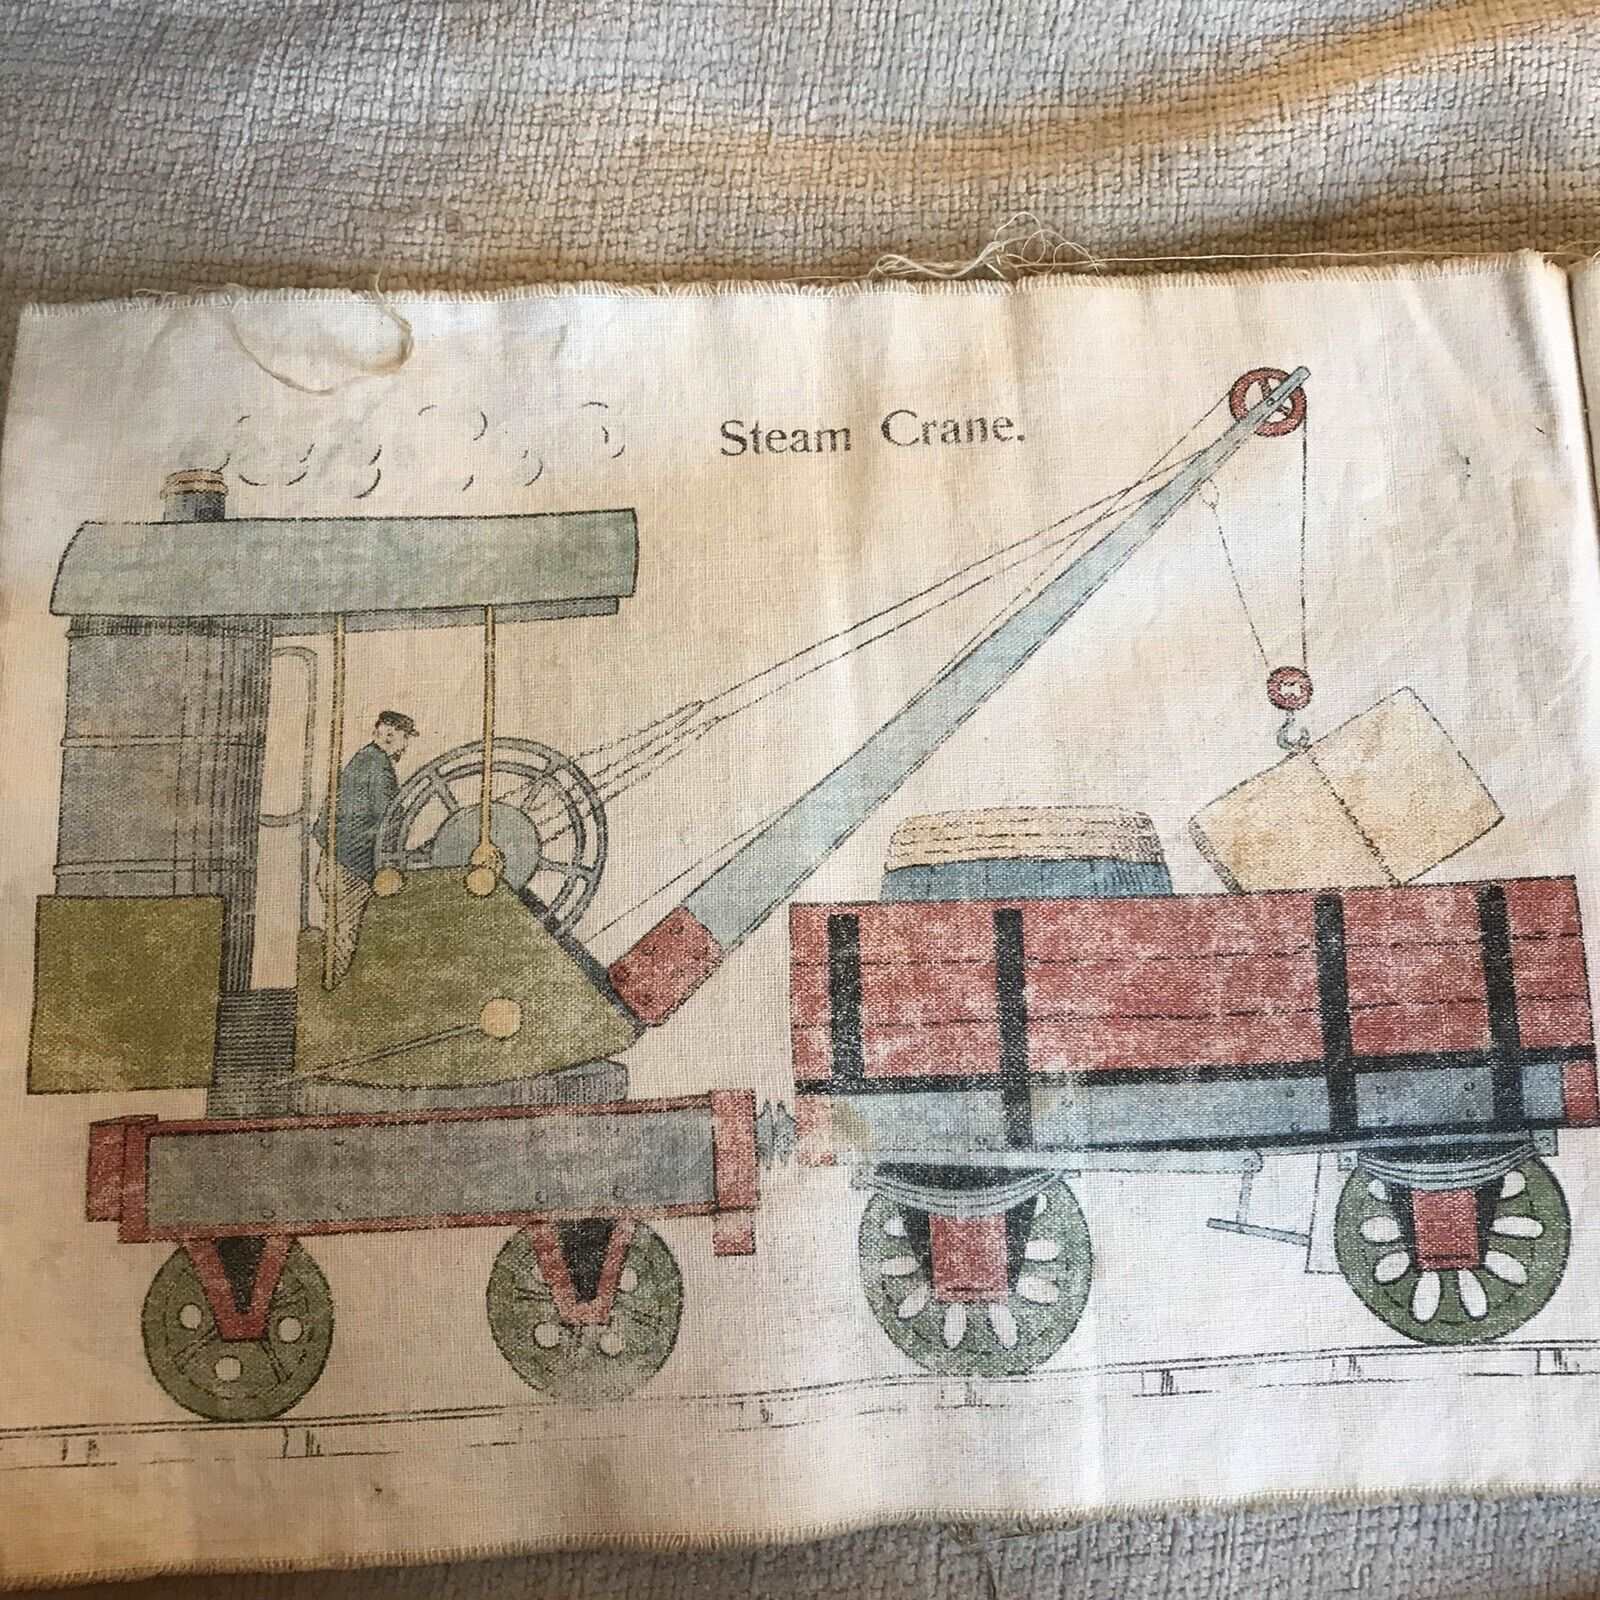 *RARE* Faded 1914circa Our Railway Book (cloth) Raphael Tuck Honeyburn Books (UK)